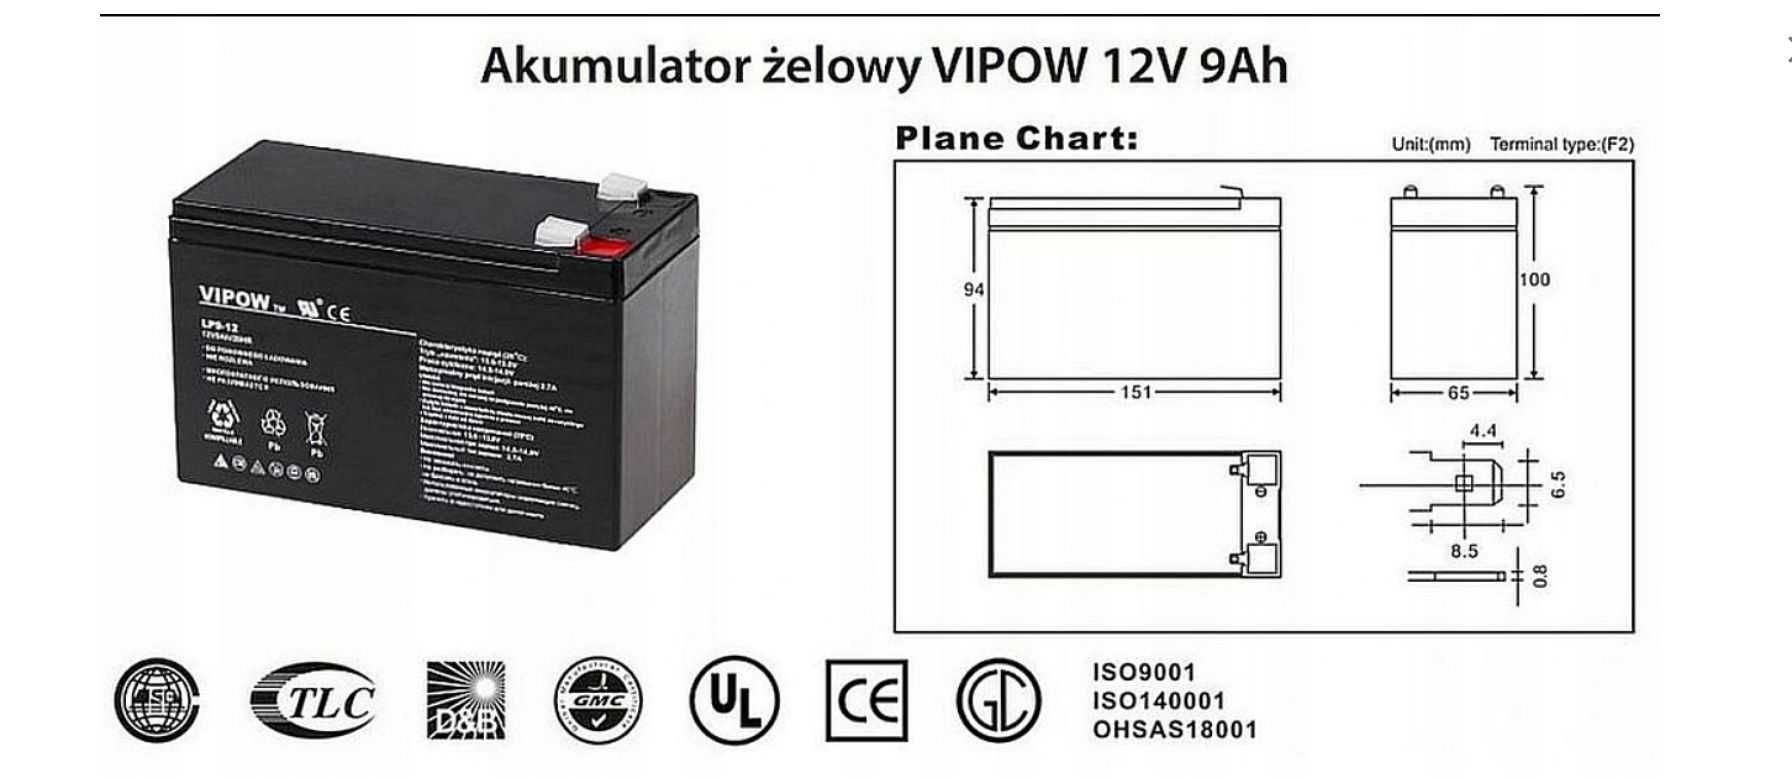 Akumulator żelowy Vipow 12V 9Ah